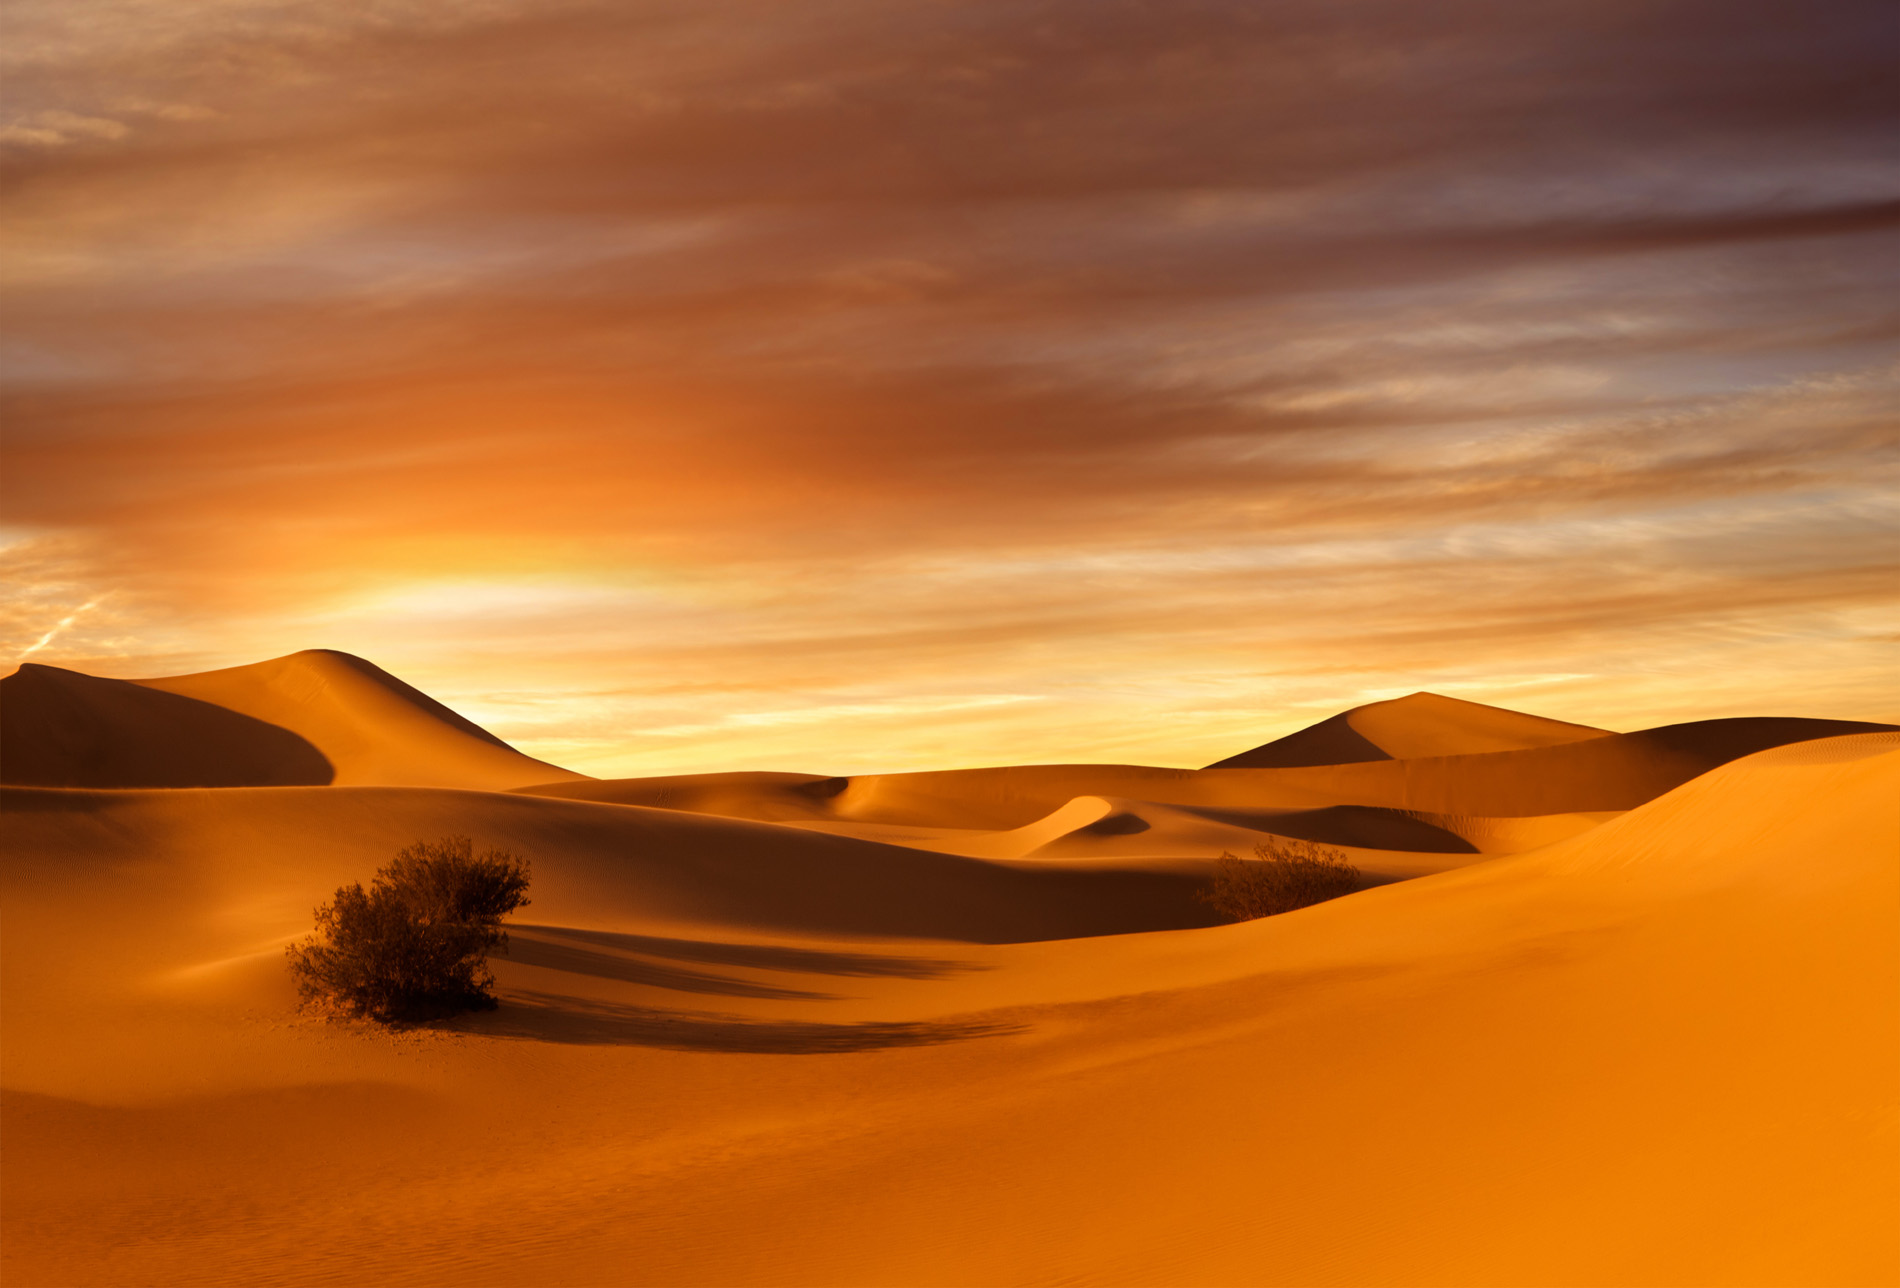 Evening sunset clouds desert scenery 52476 - World Wallpapers ...